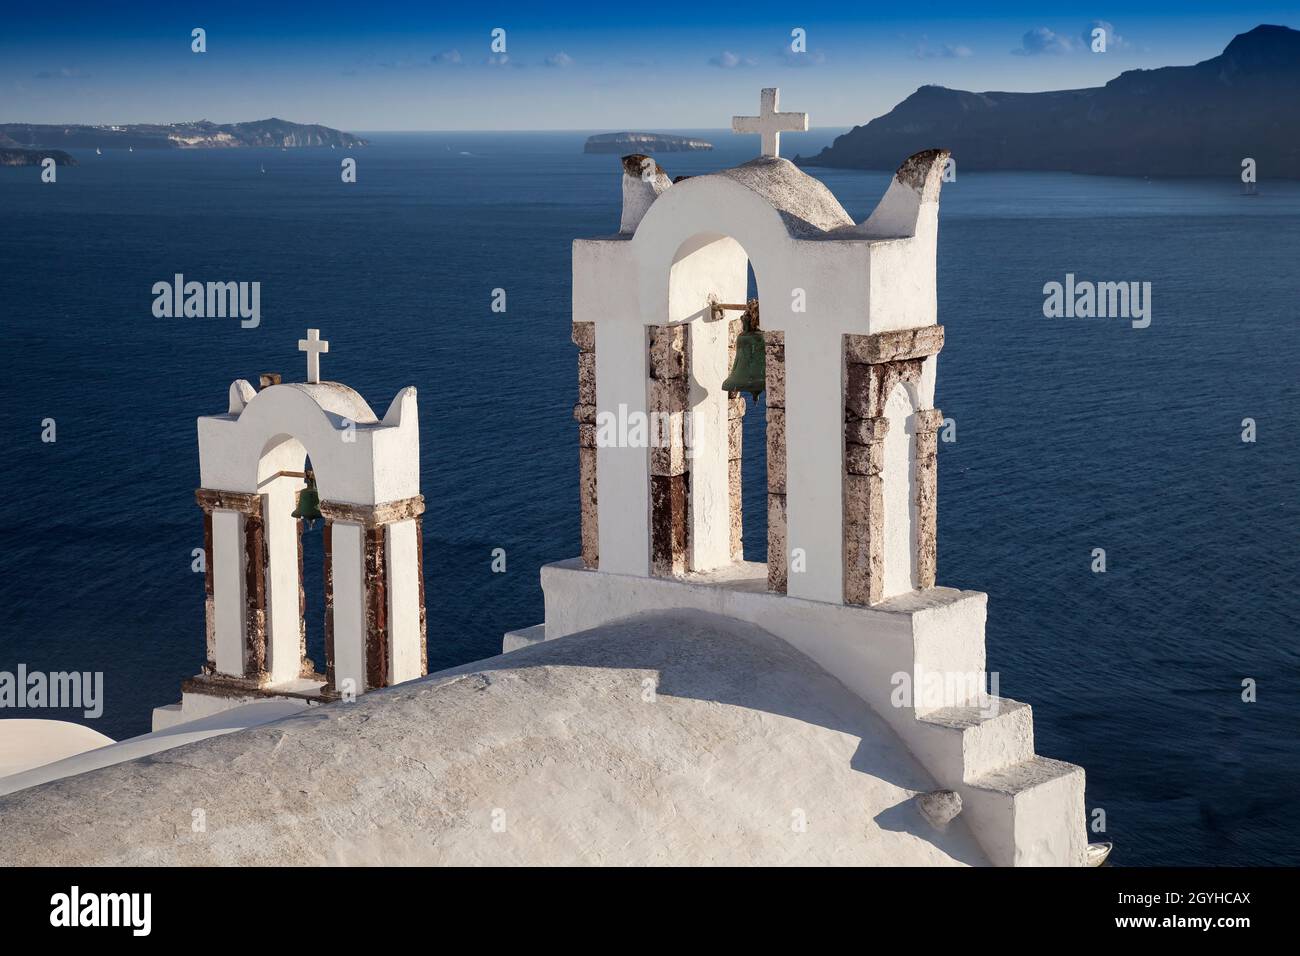 Orthodox Church with bell tower in Oia, Santorini, Cyclades, Aegean Sea, Greece, Europe Stock Photo